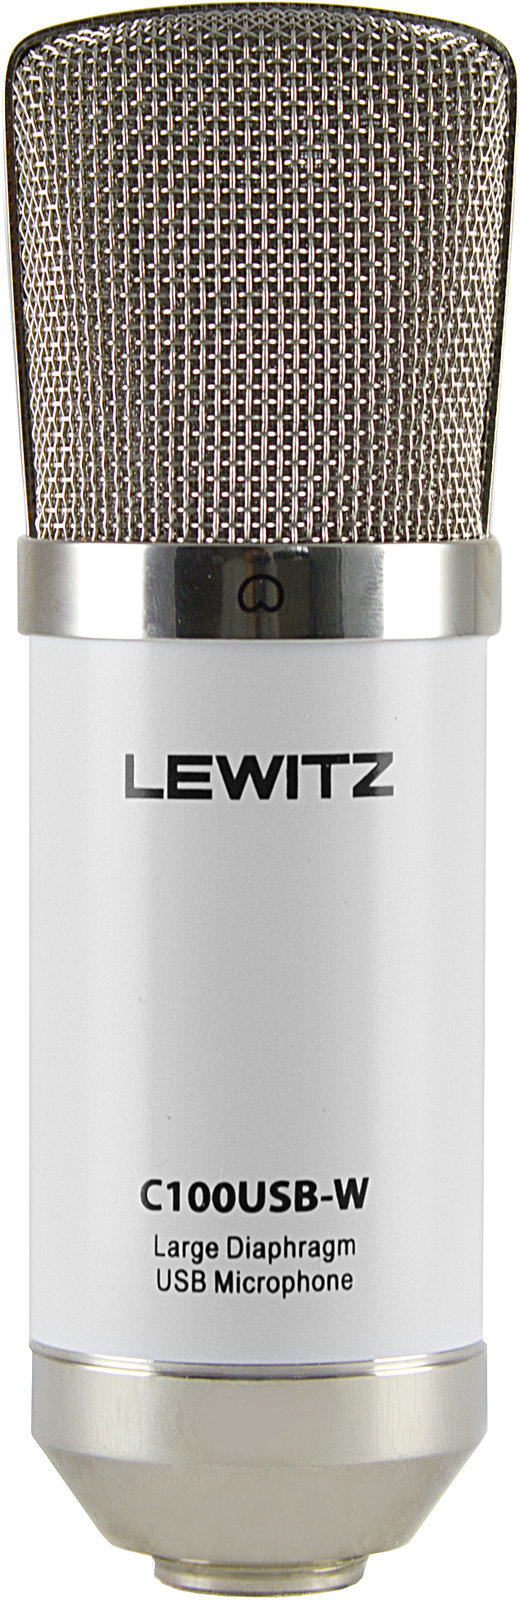 USB-microfoon Lewitz C120USB